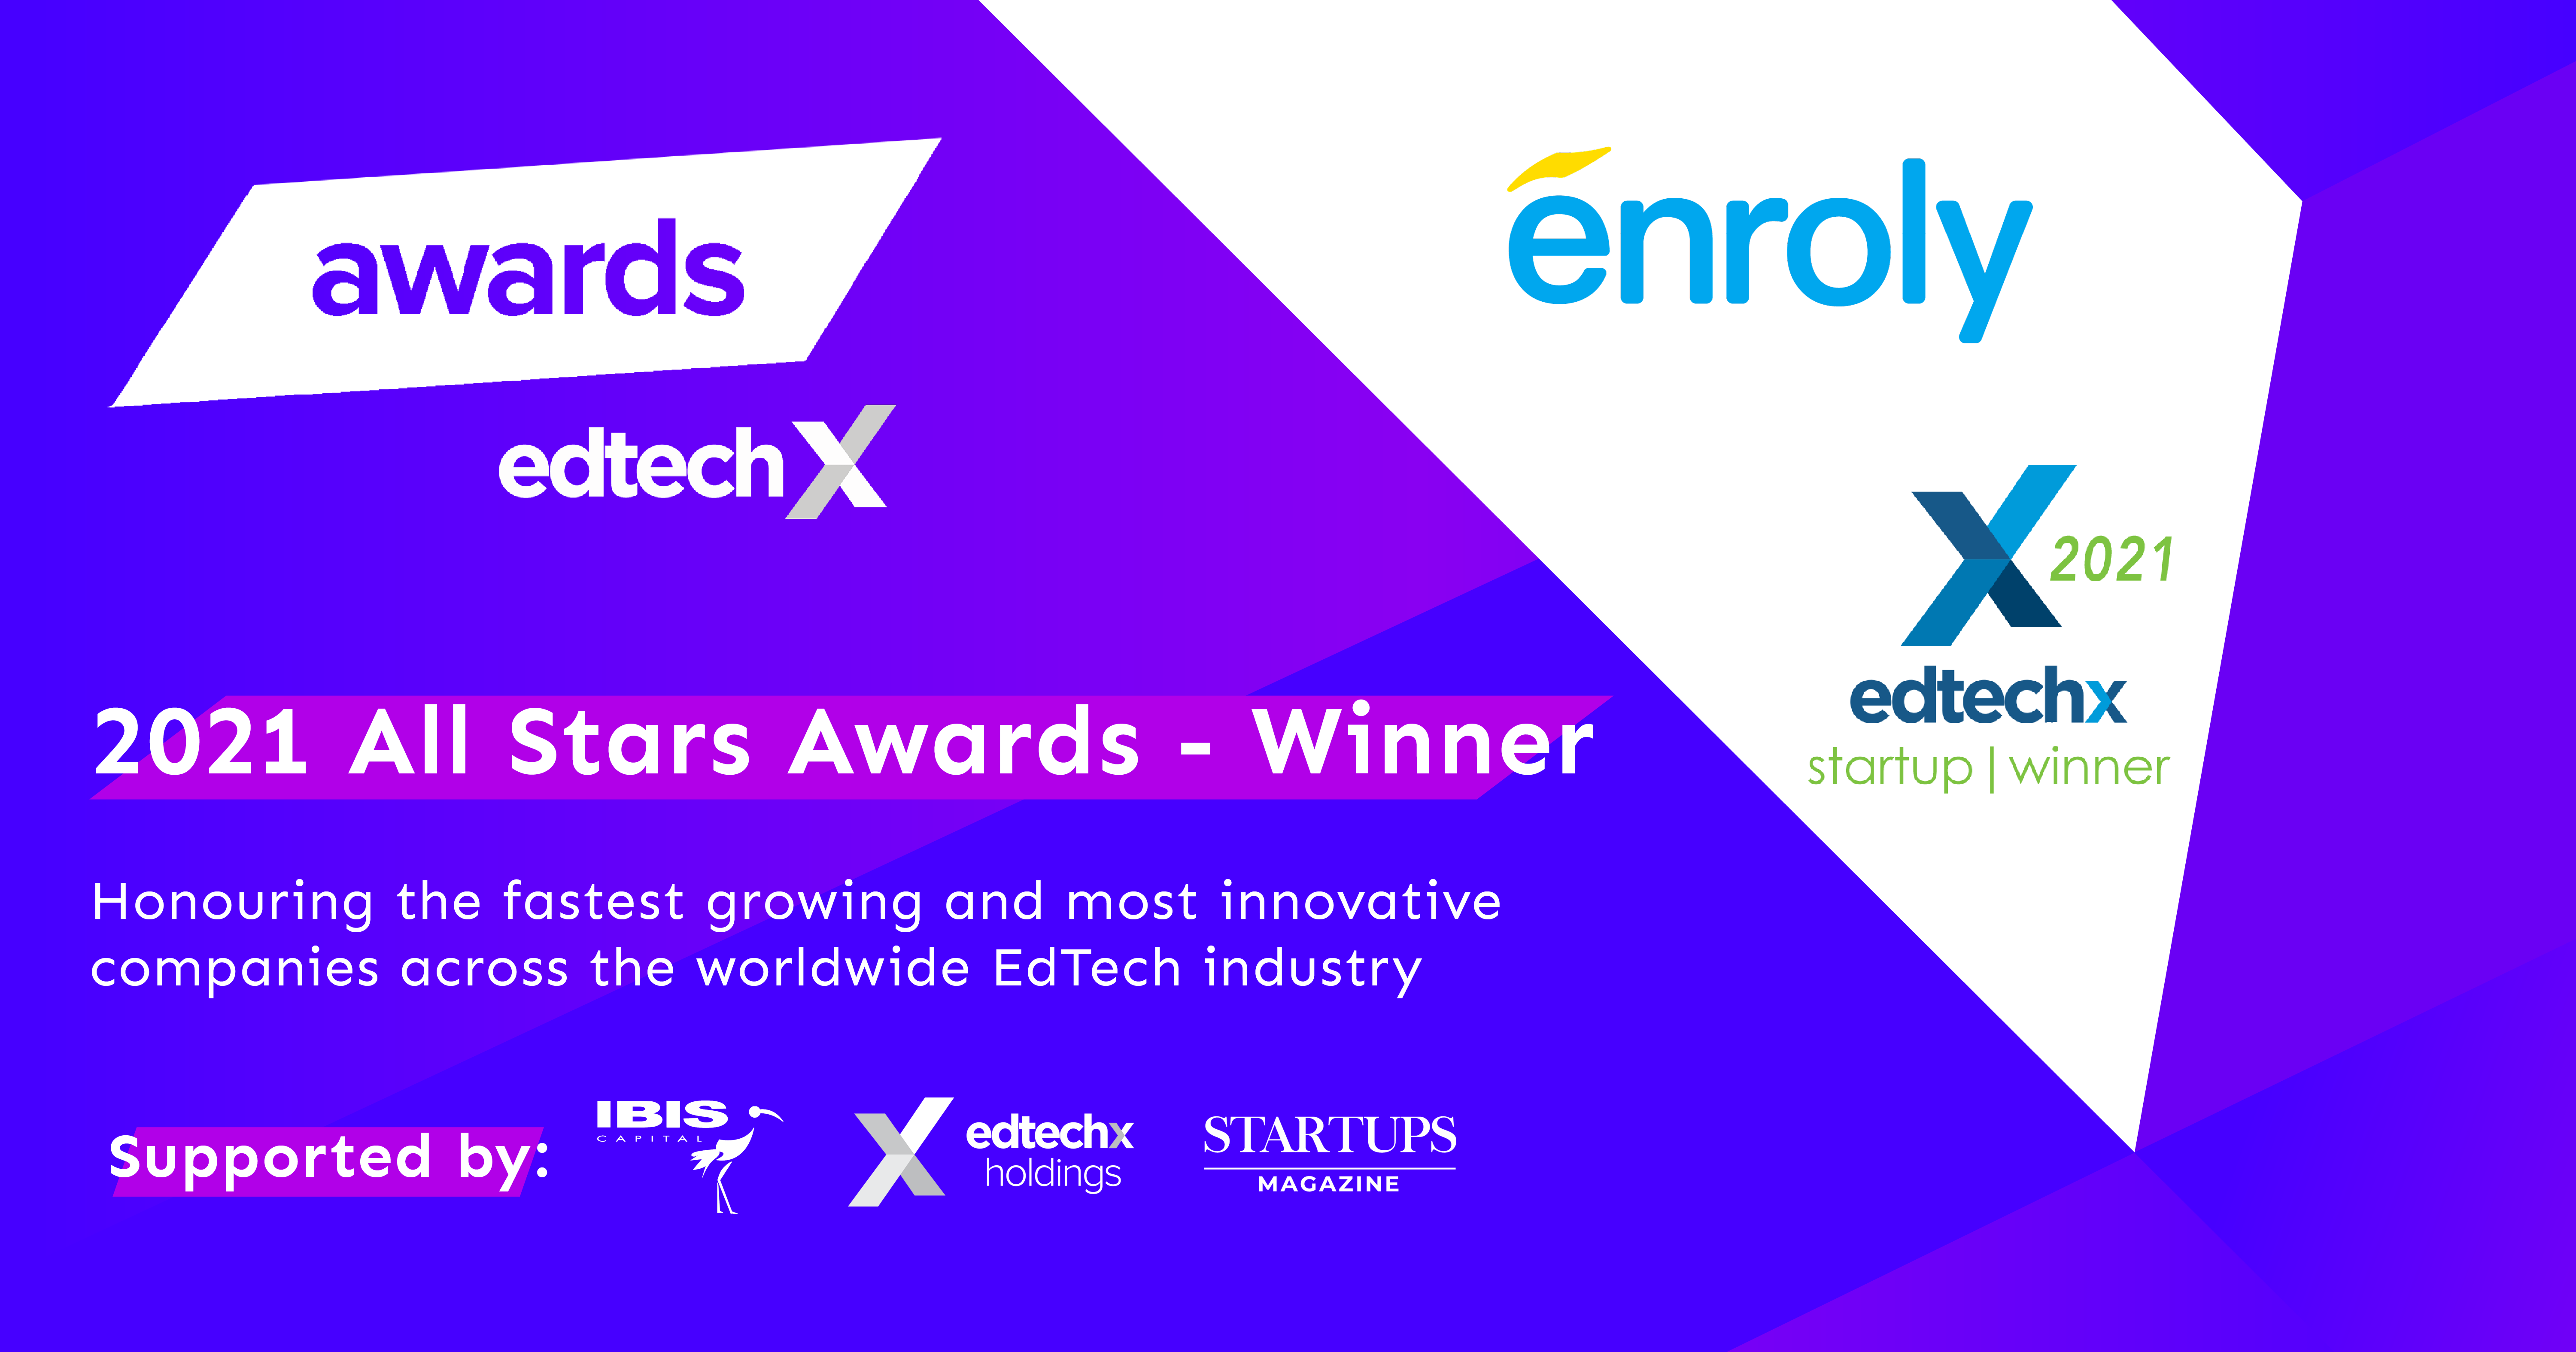 Enroly wins 2021 EdTechX Startup Award for Innovation & Growth